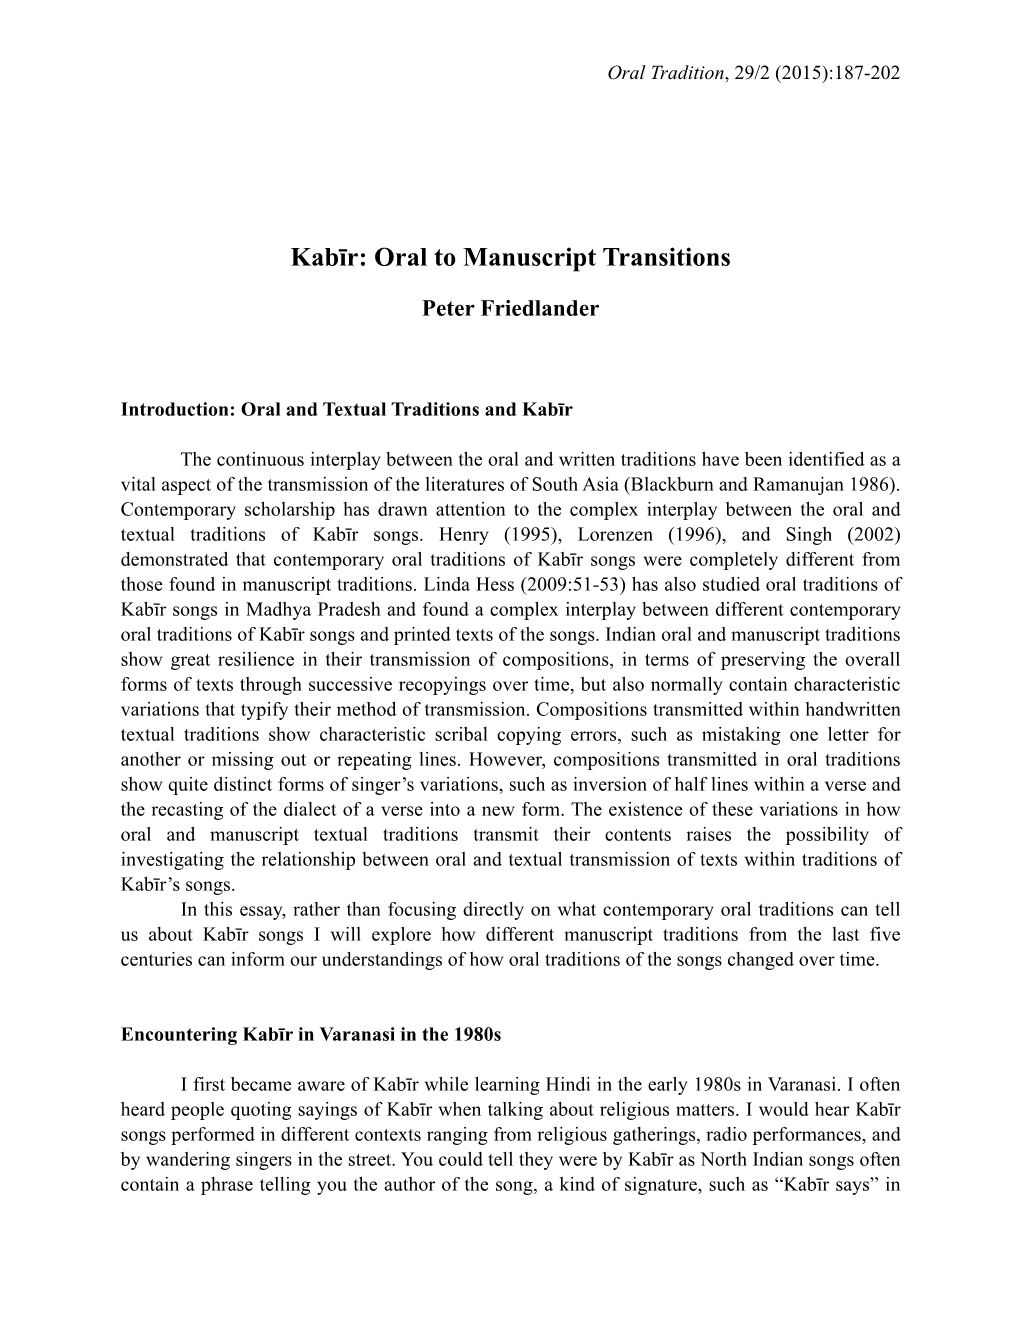 Kabīr: Oral to Manuscript Transitions